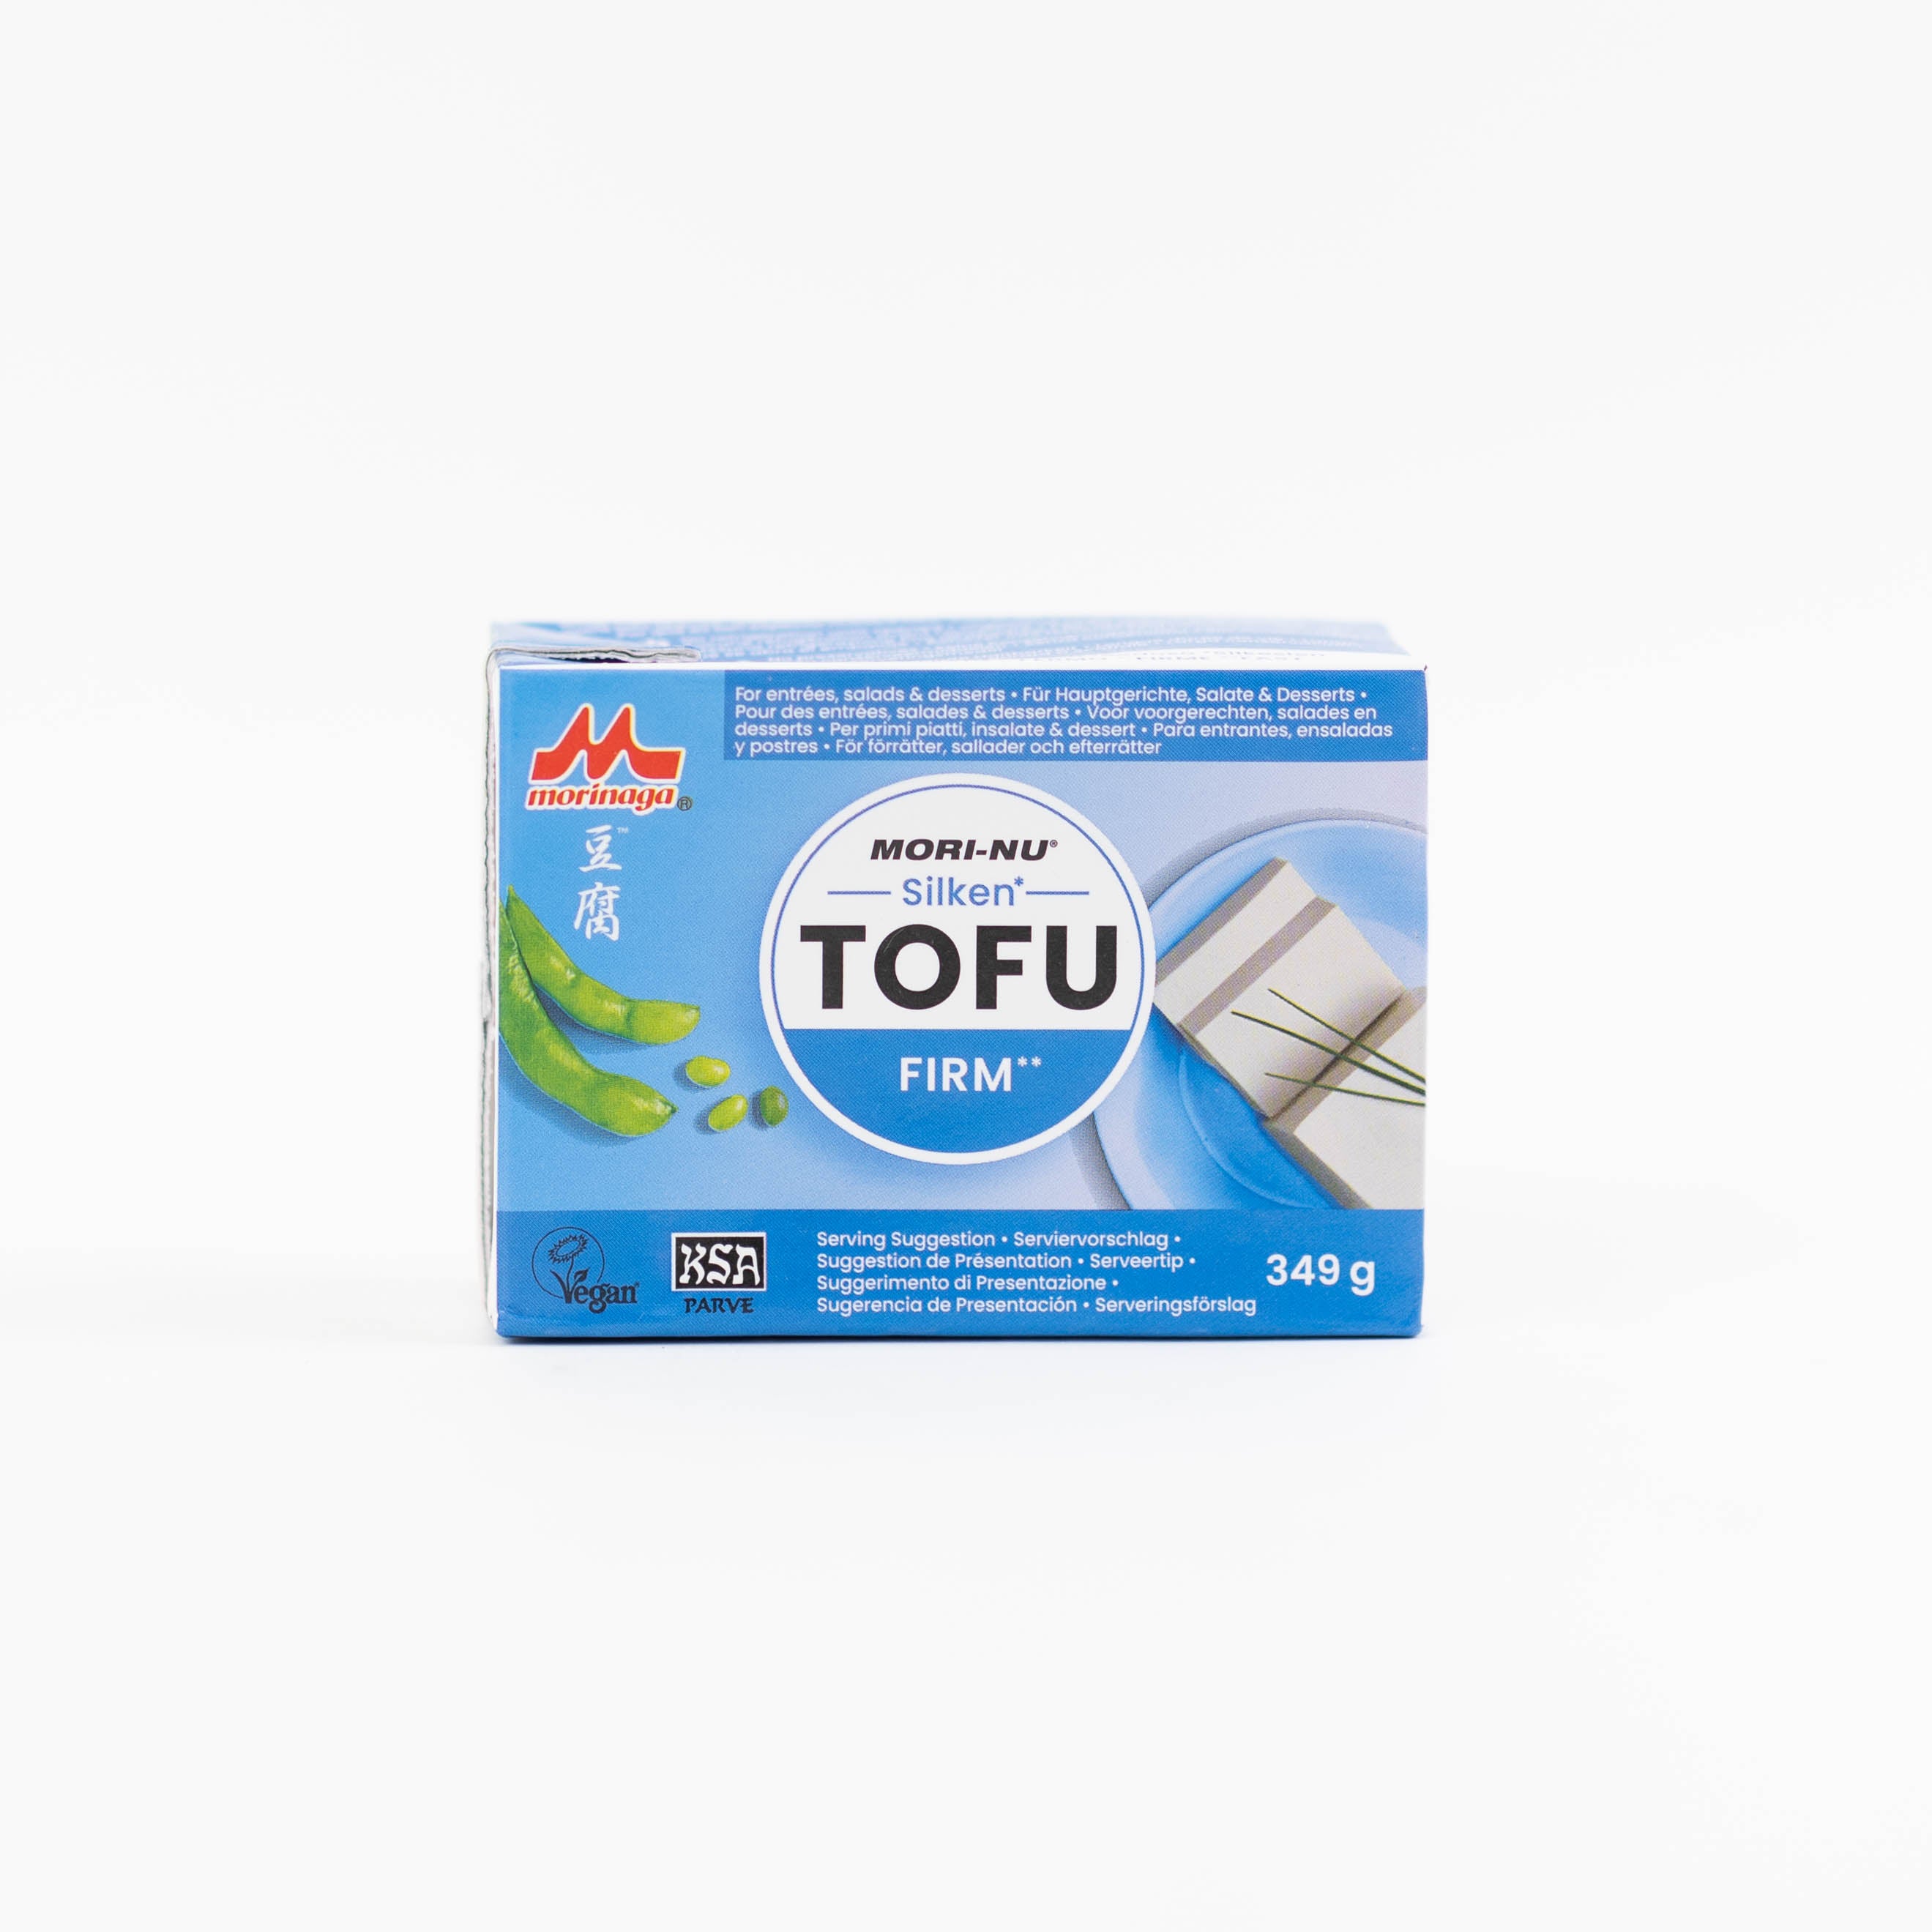 dinese.de mori nu silken tofu onlineshop asiashop asiatische lebensmittel